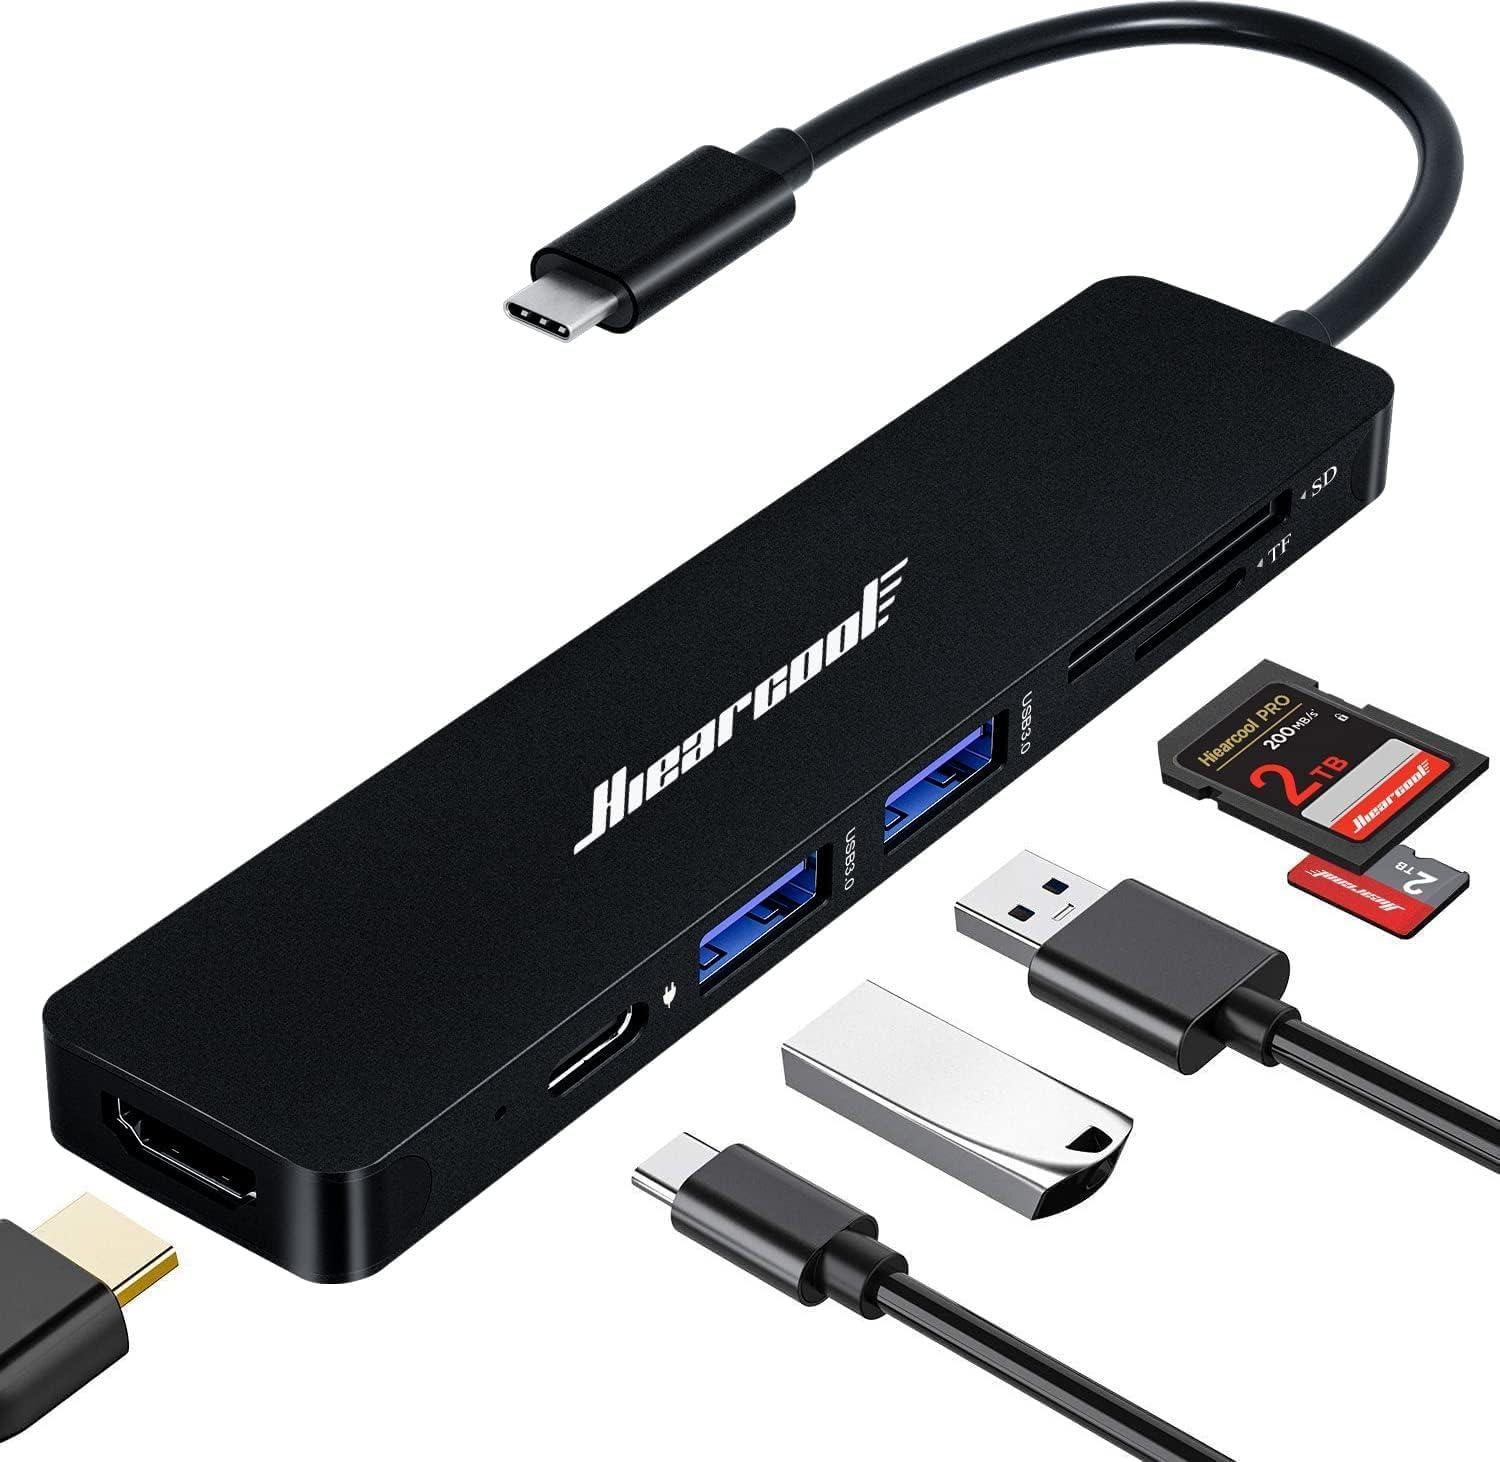 Hiearcool USB-C Hub Multi-Port Adapter for $9.99